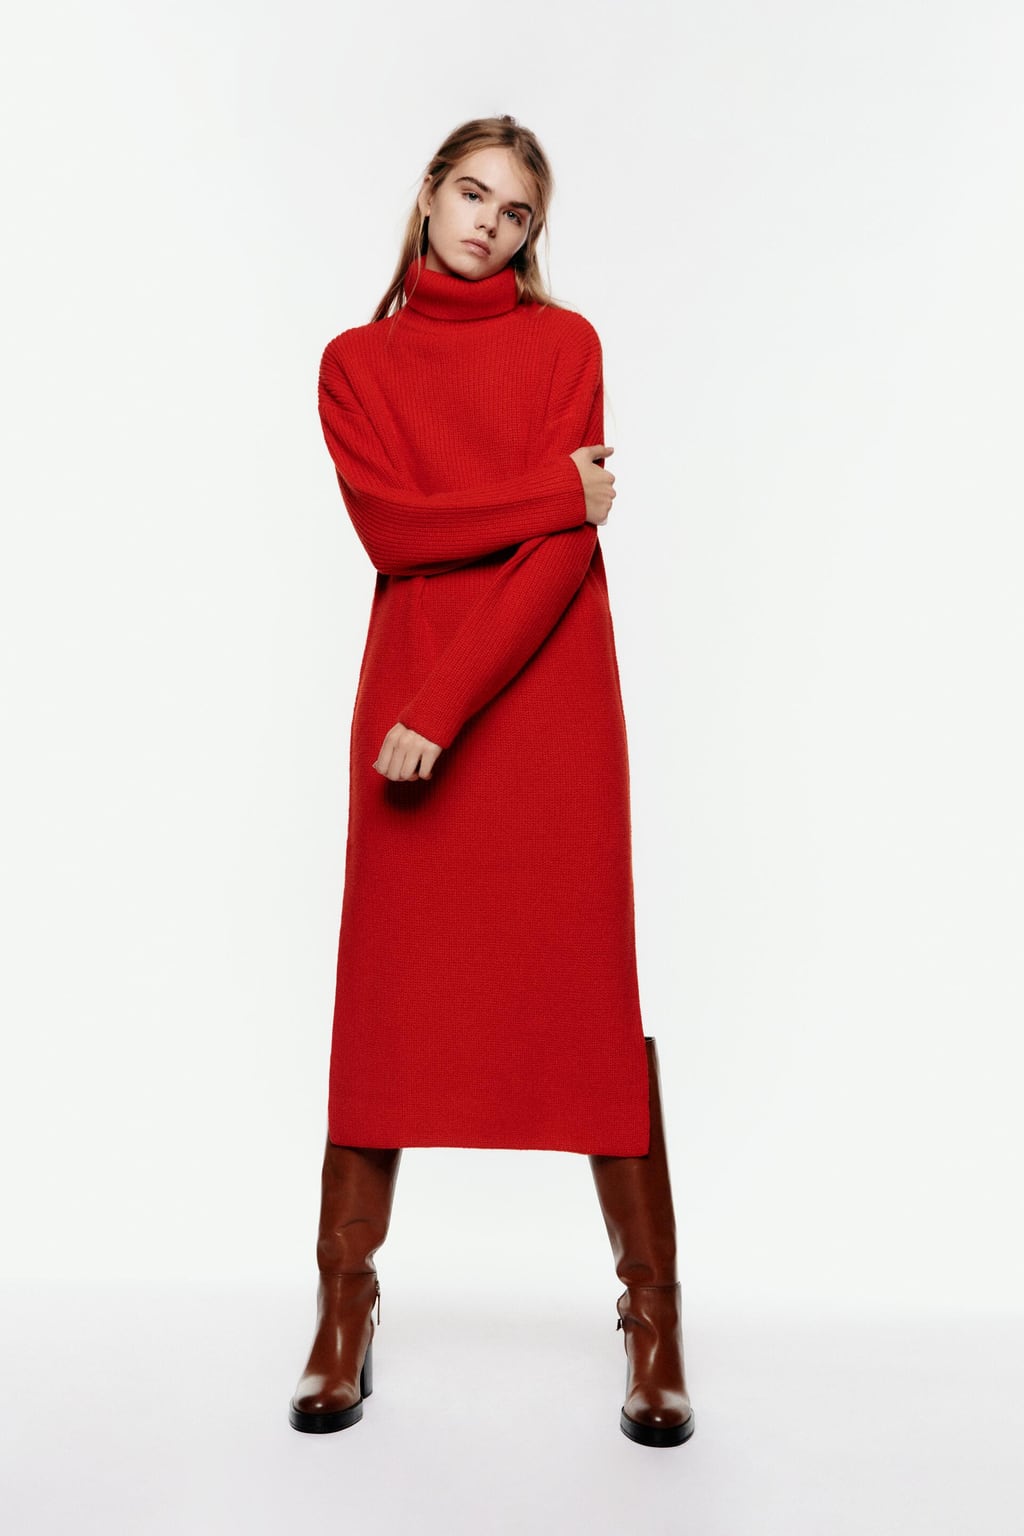 Zara Long Knit Turtleneck Dress